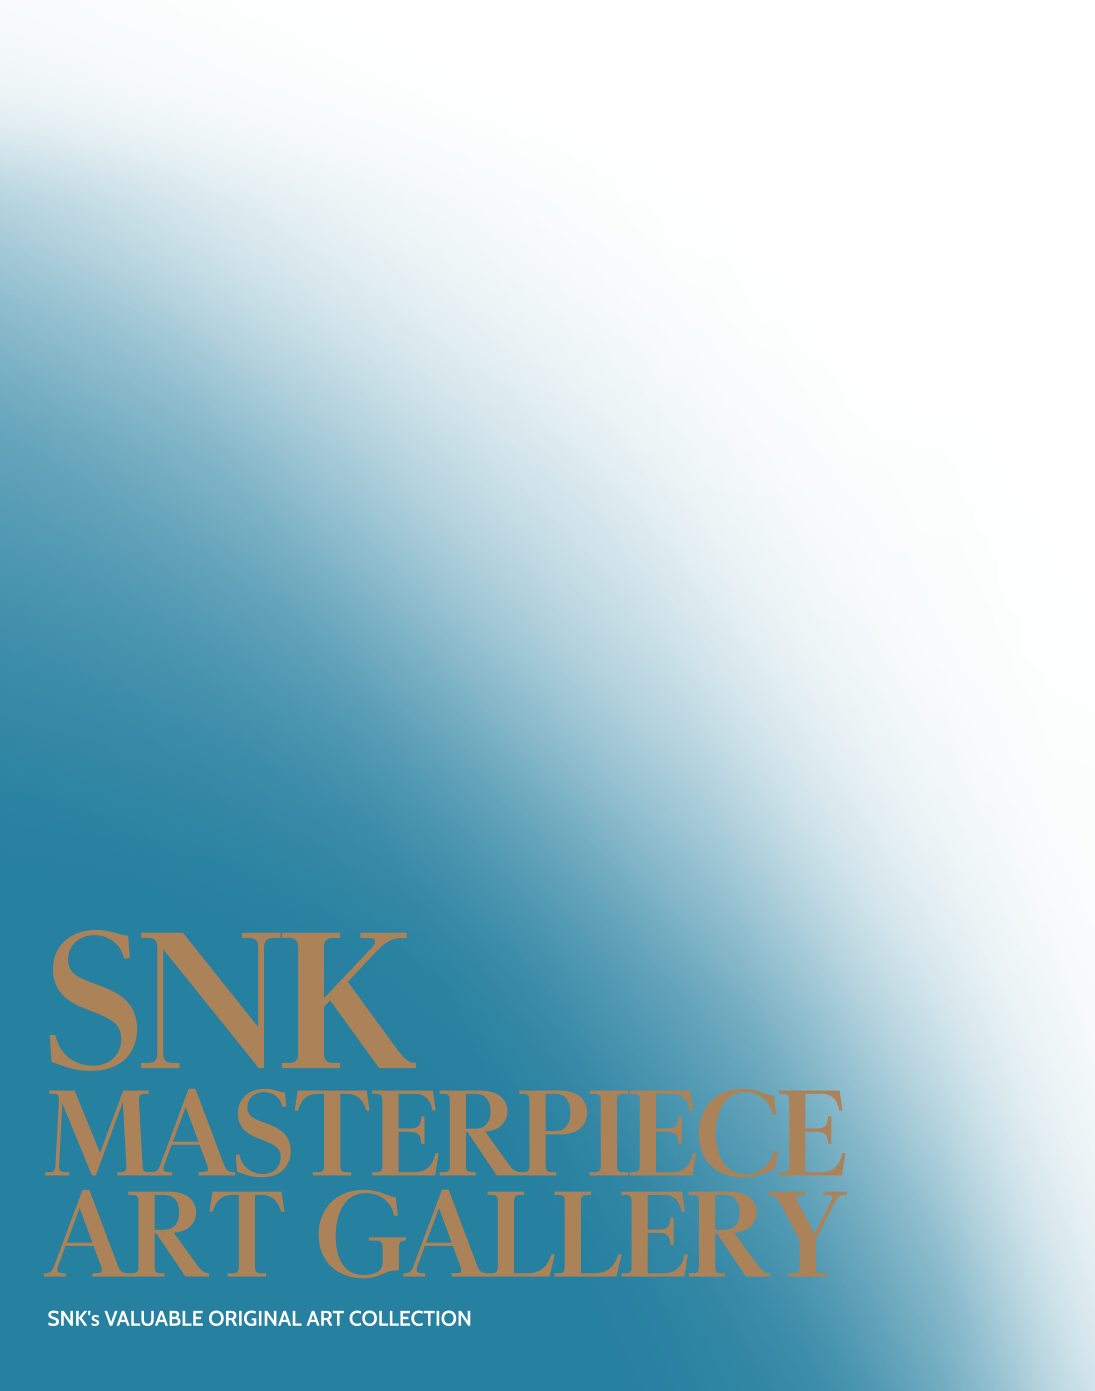 SNK MASTERPIECE ART GALLERY